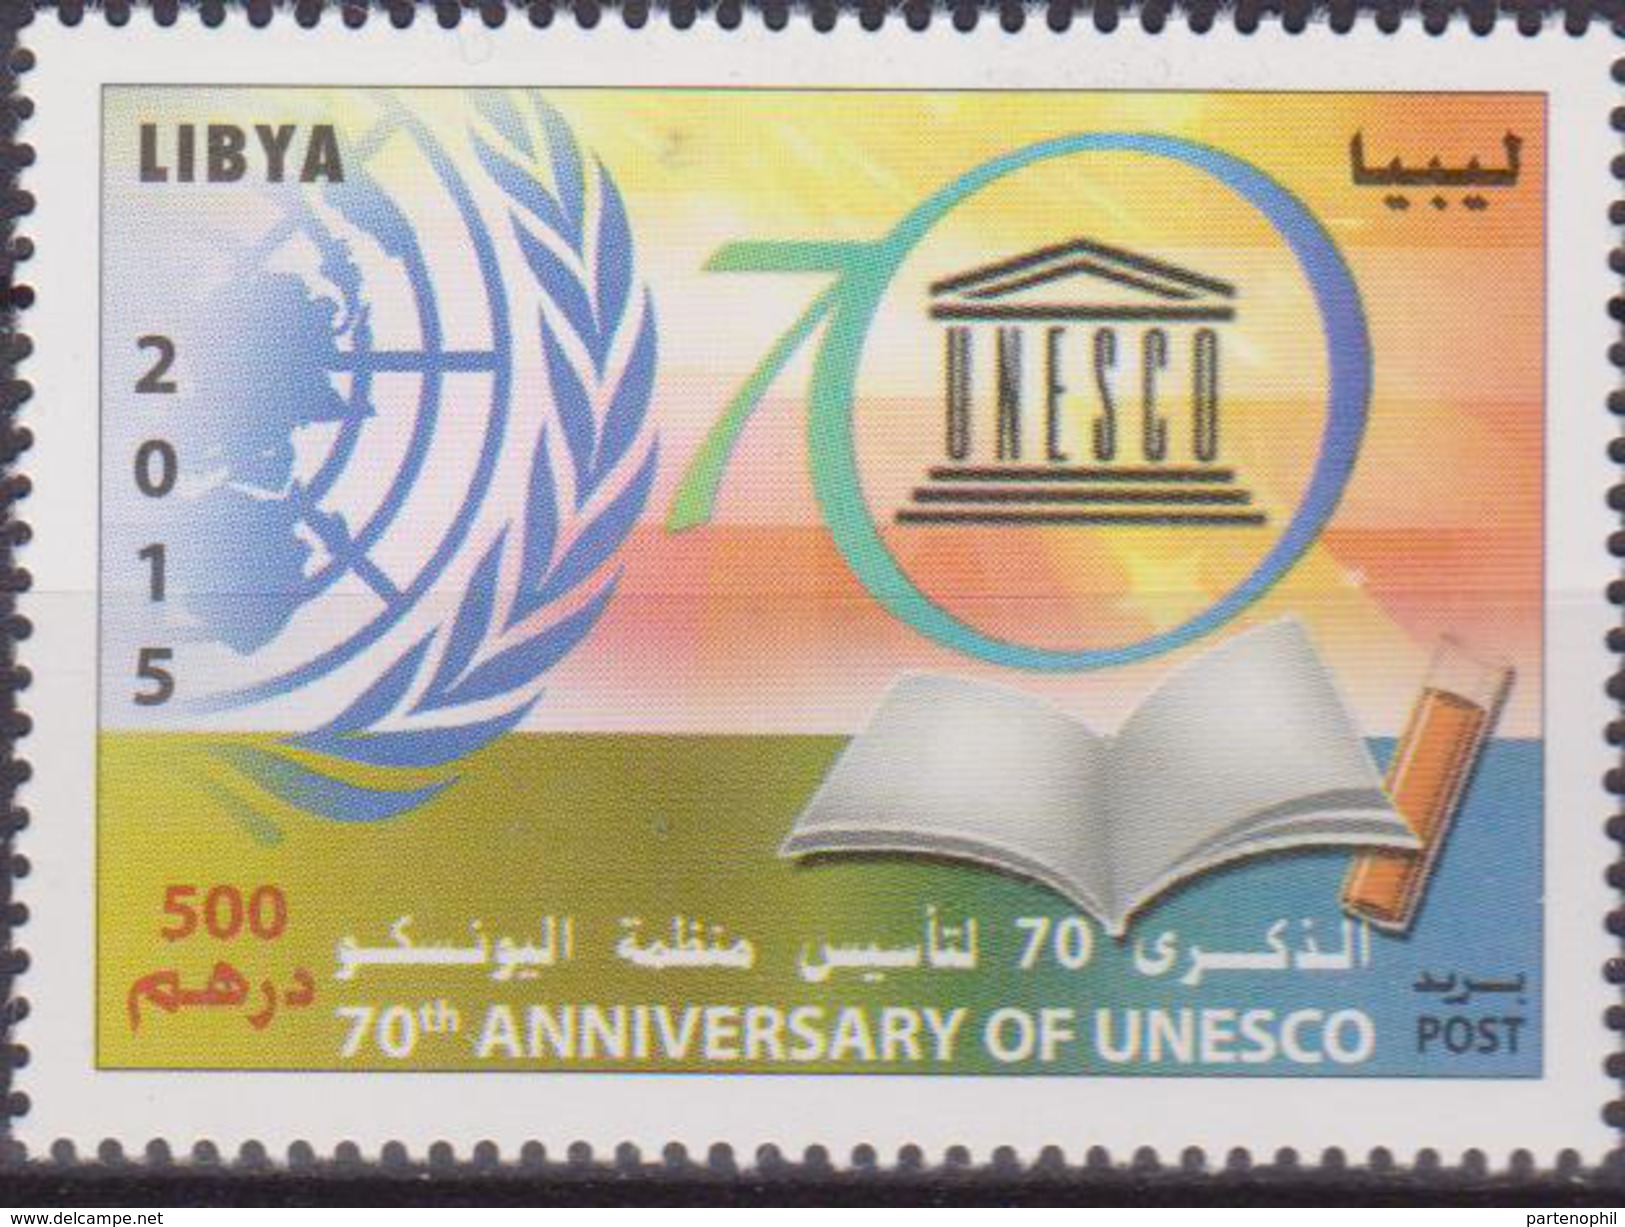 LIBYA UNESCO 1 V MNH - UNESCO